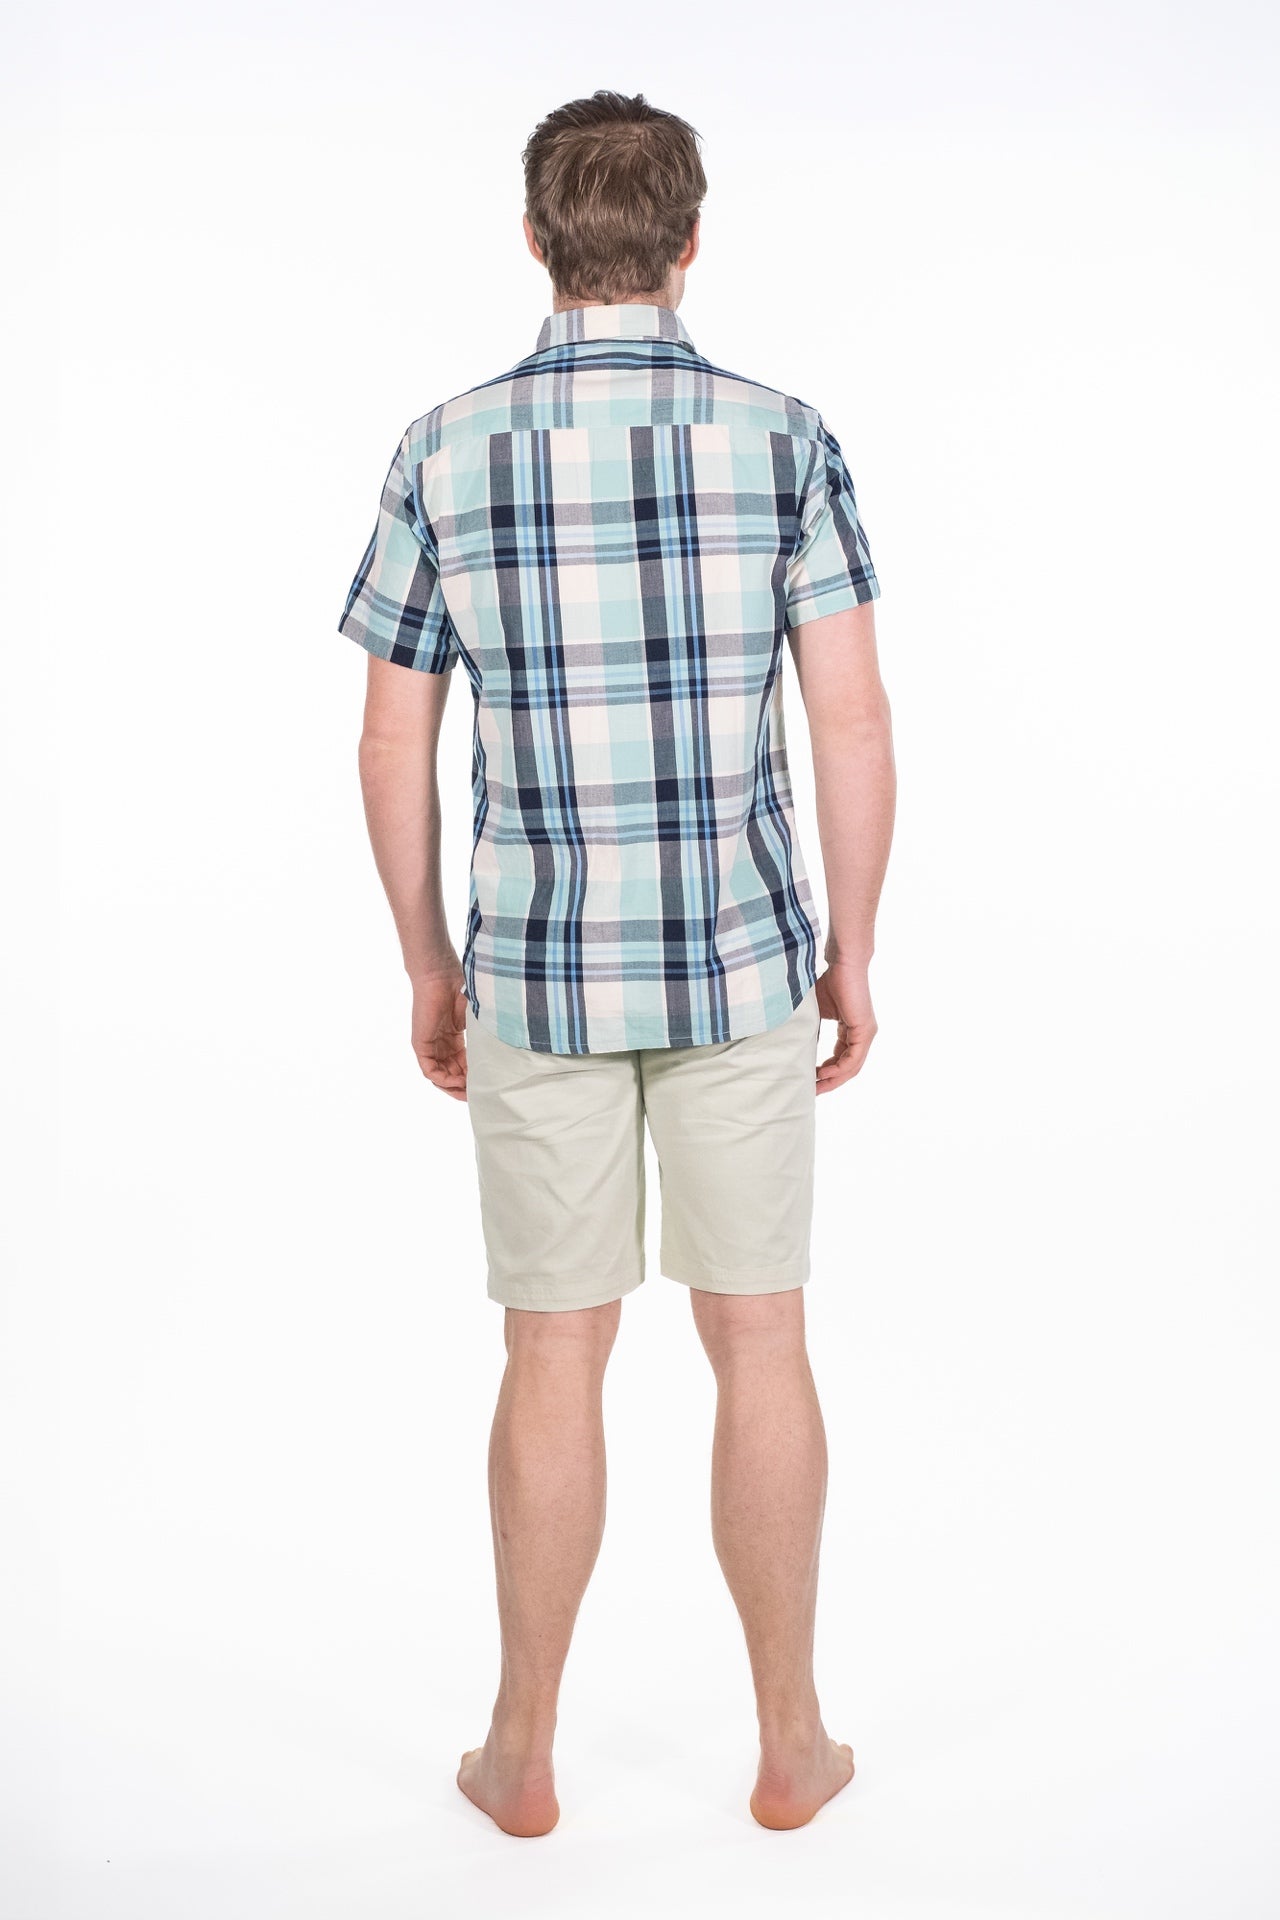 Cain Navy Check Short Sleeve Shirt - Rupert and Buckley - Shirt